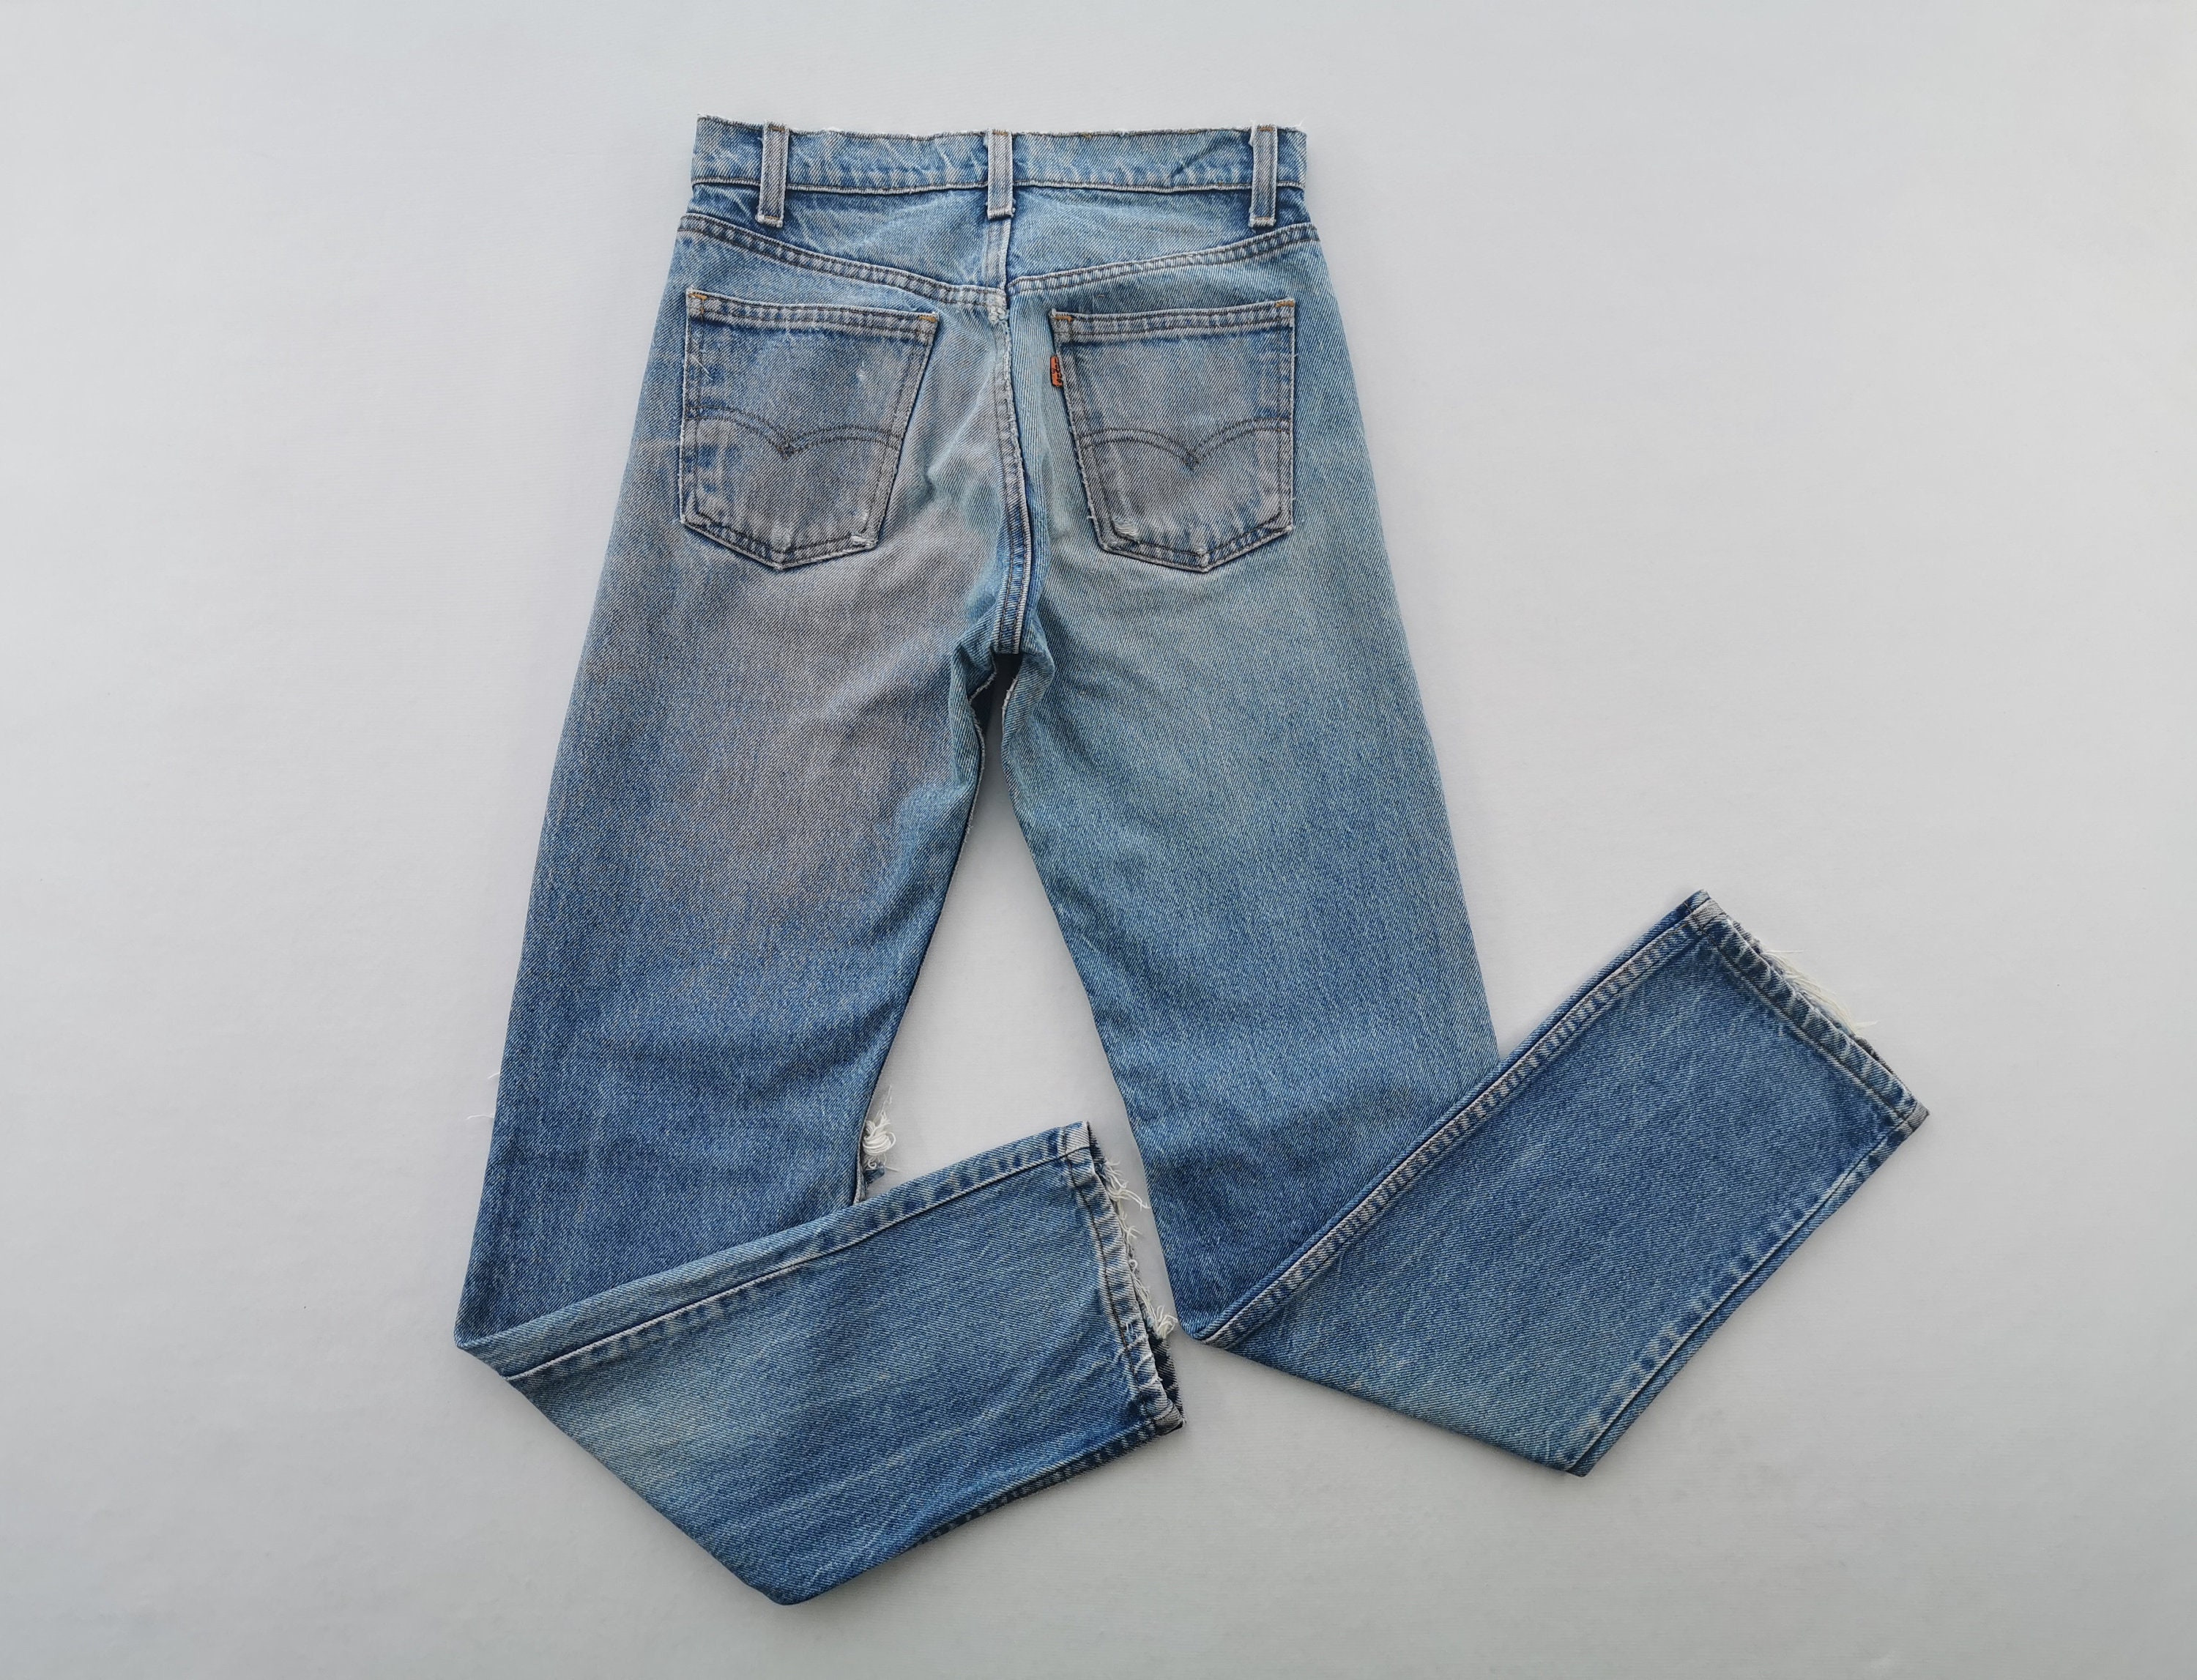 Levis 575 Jeans Distressed Vintage Levis 575 Orange Tag Denim - Etsy Canada